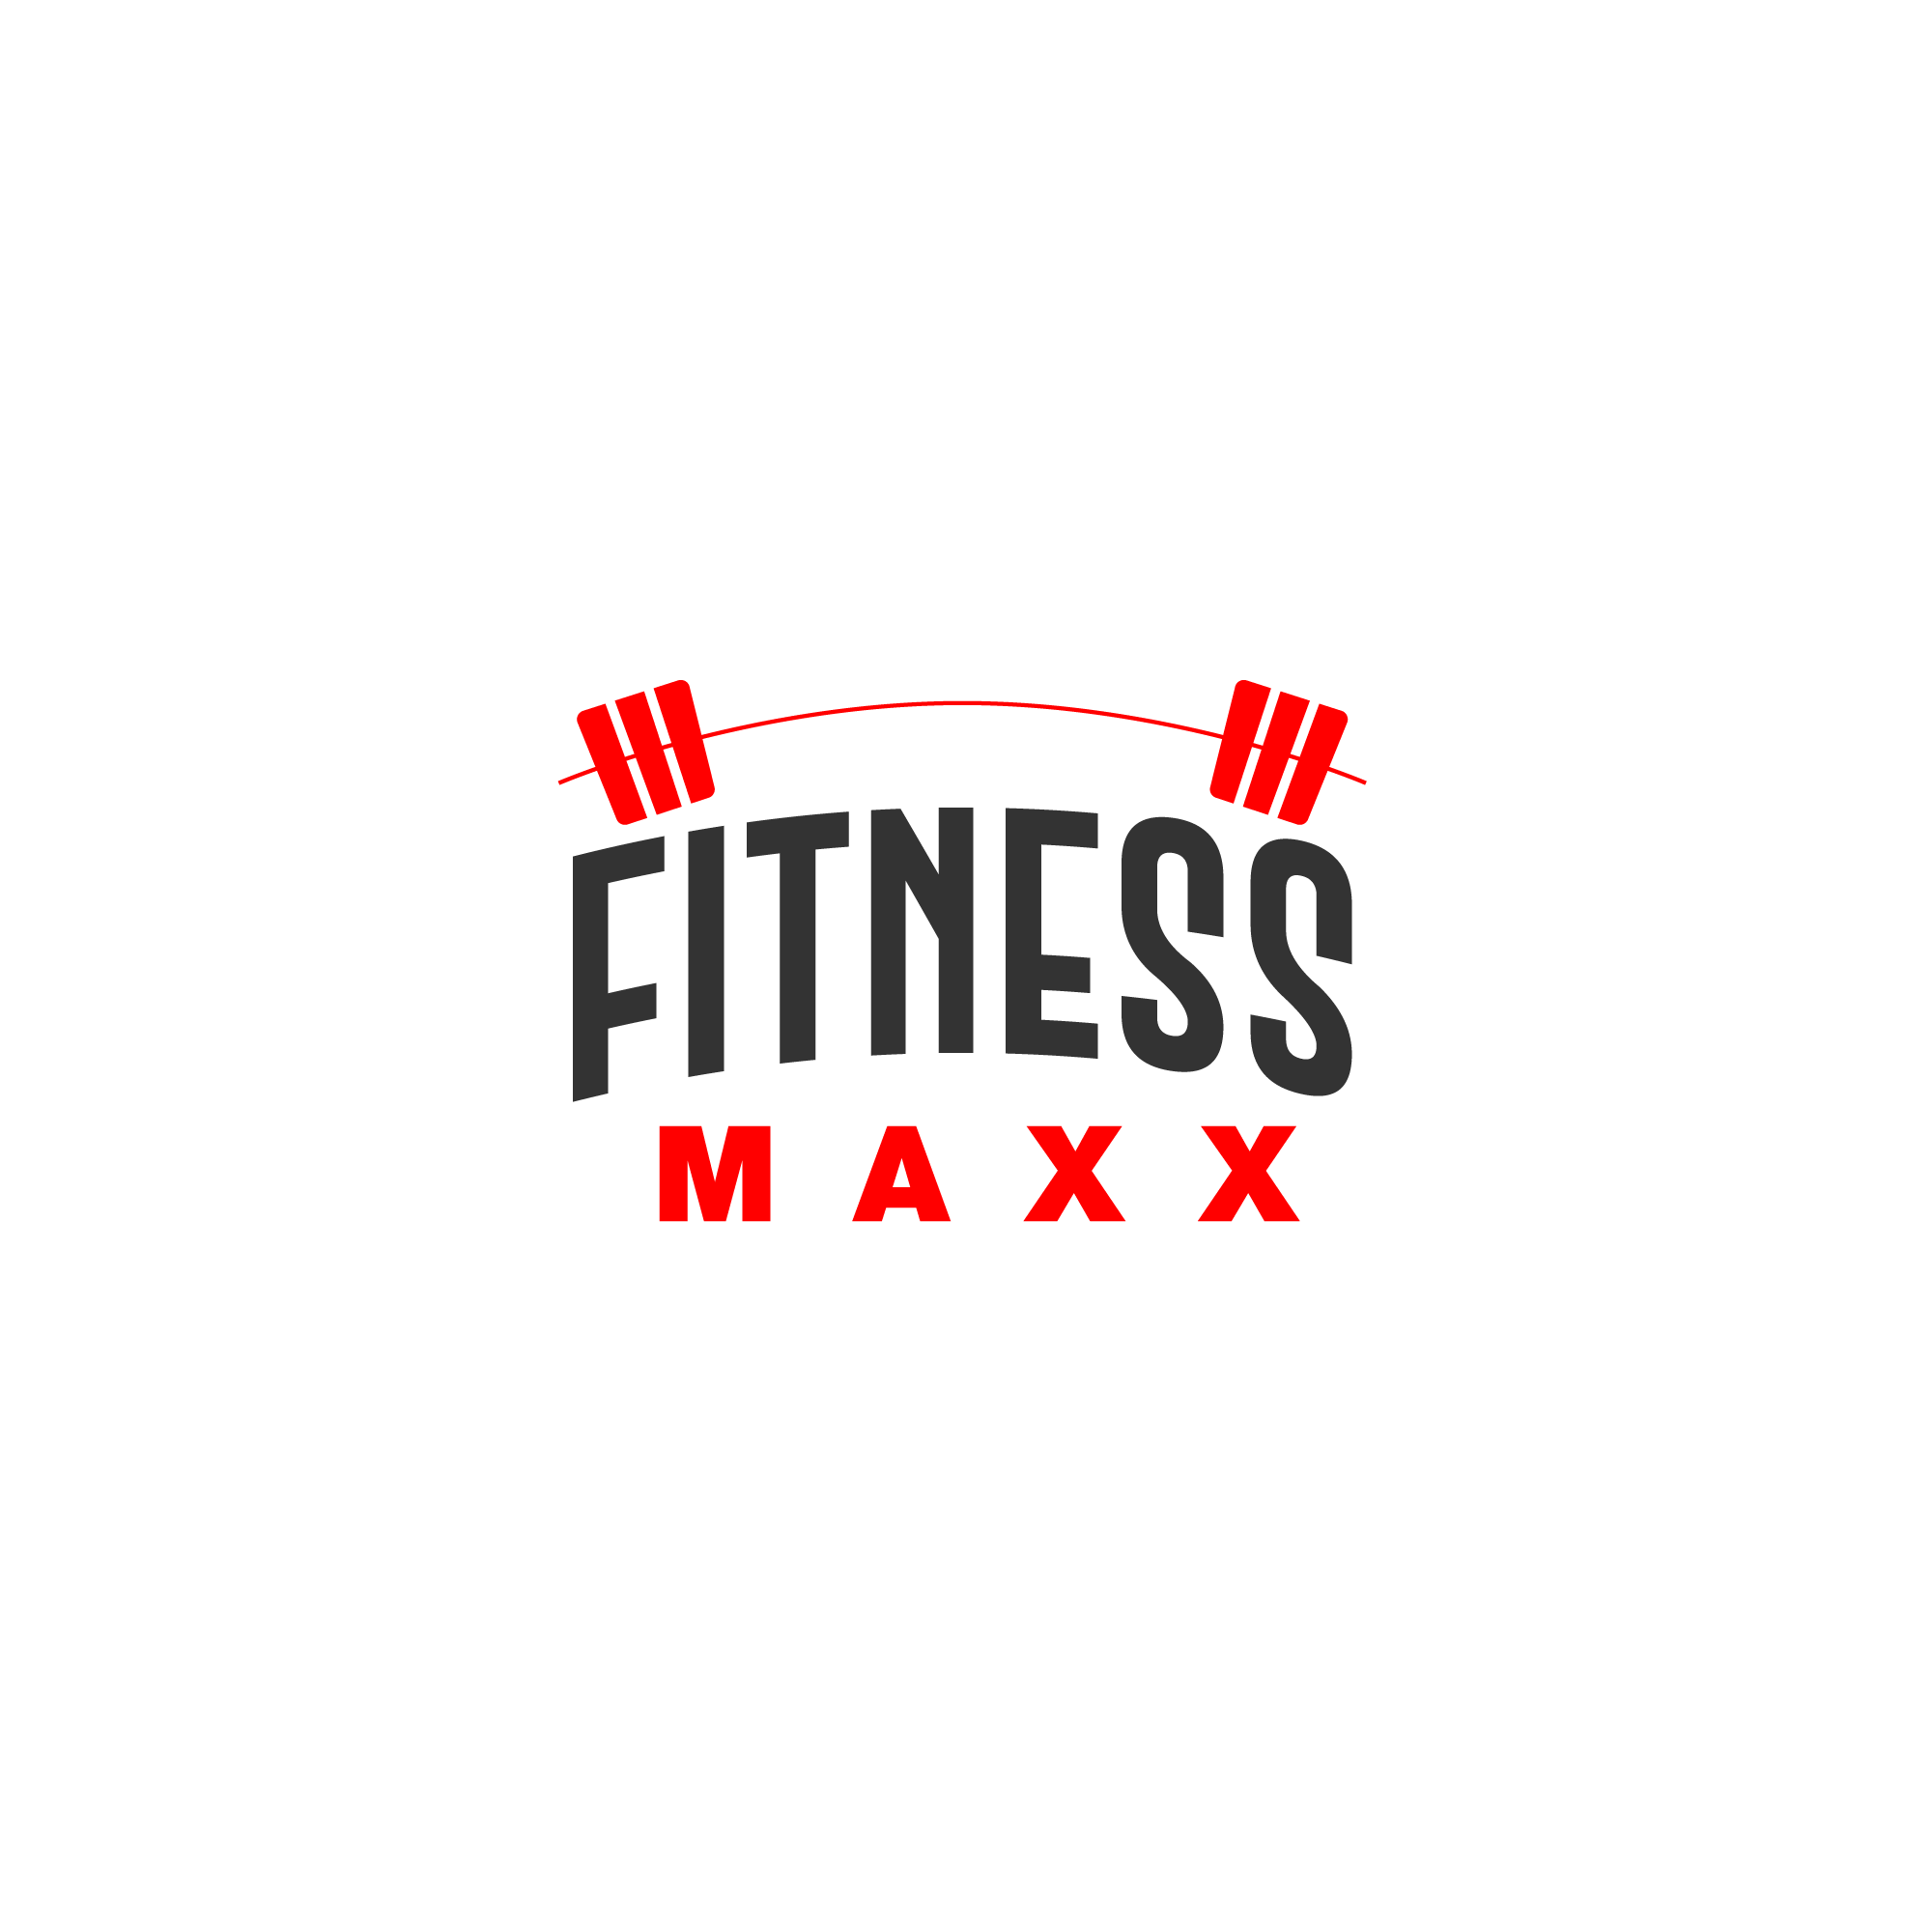 (c) Fitnessmaxx.de